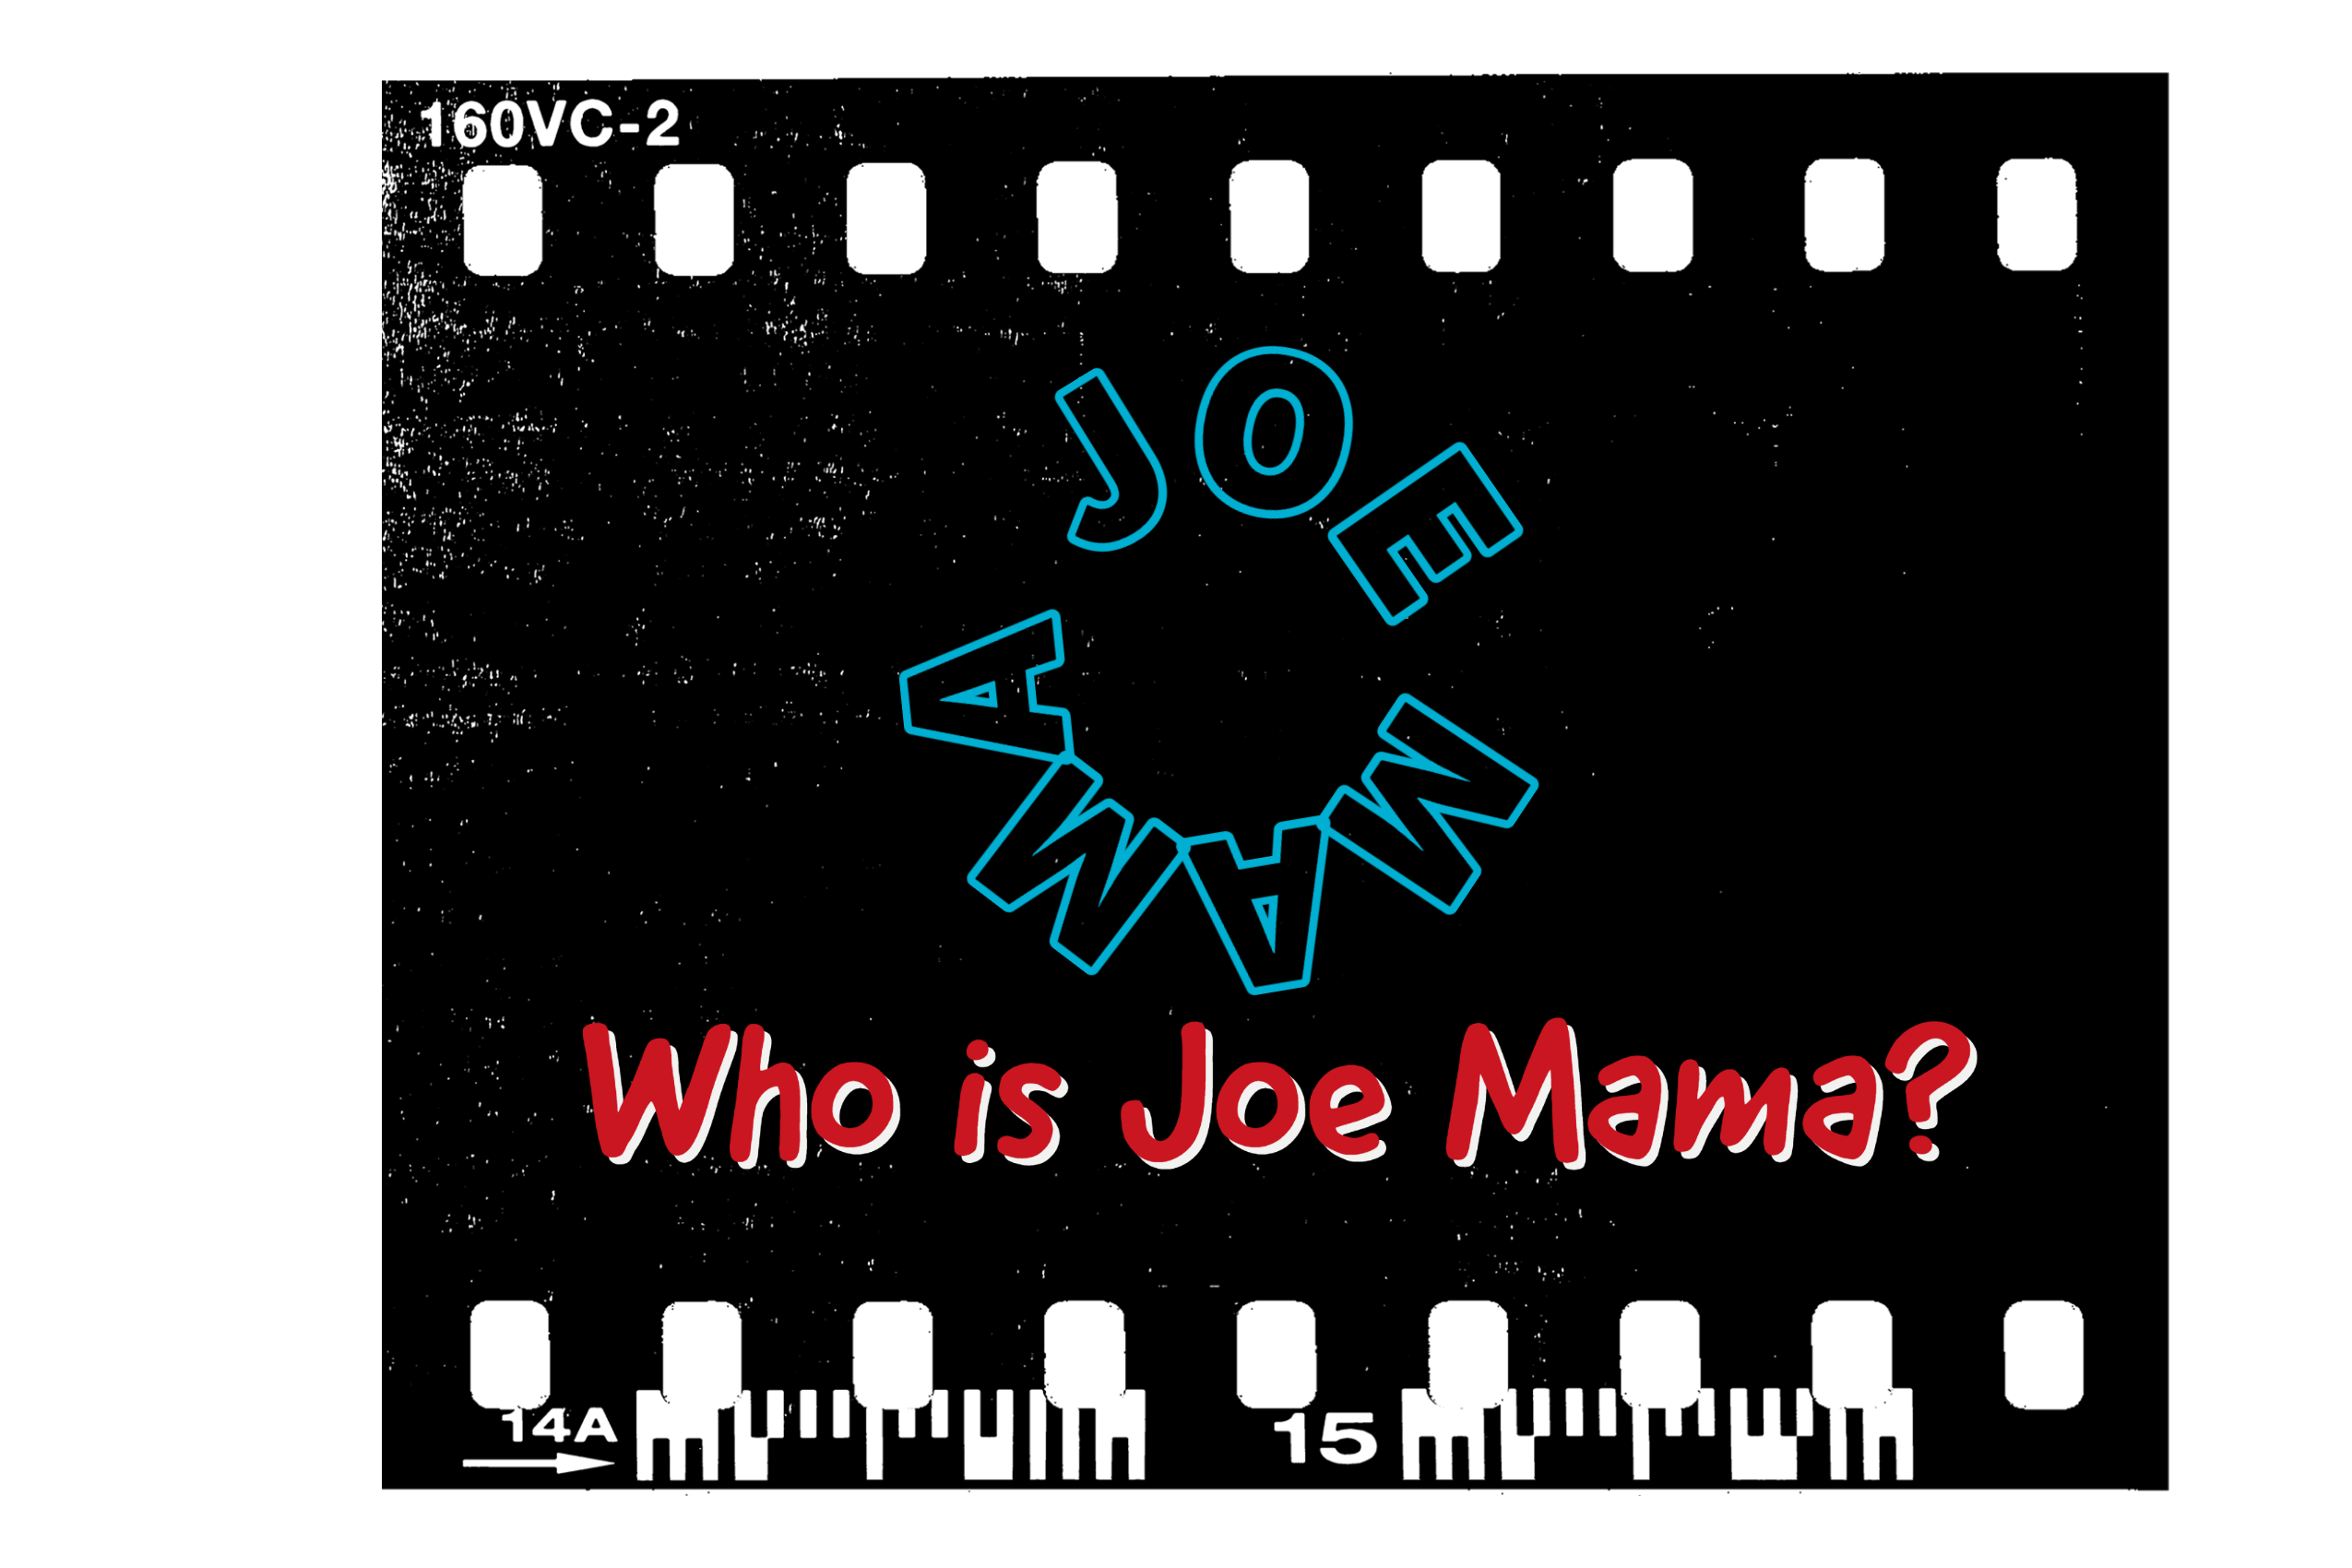 Joe mama meaning